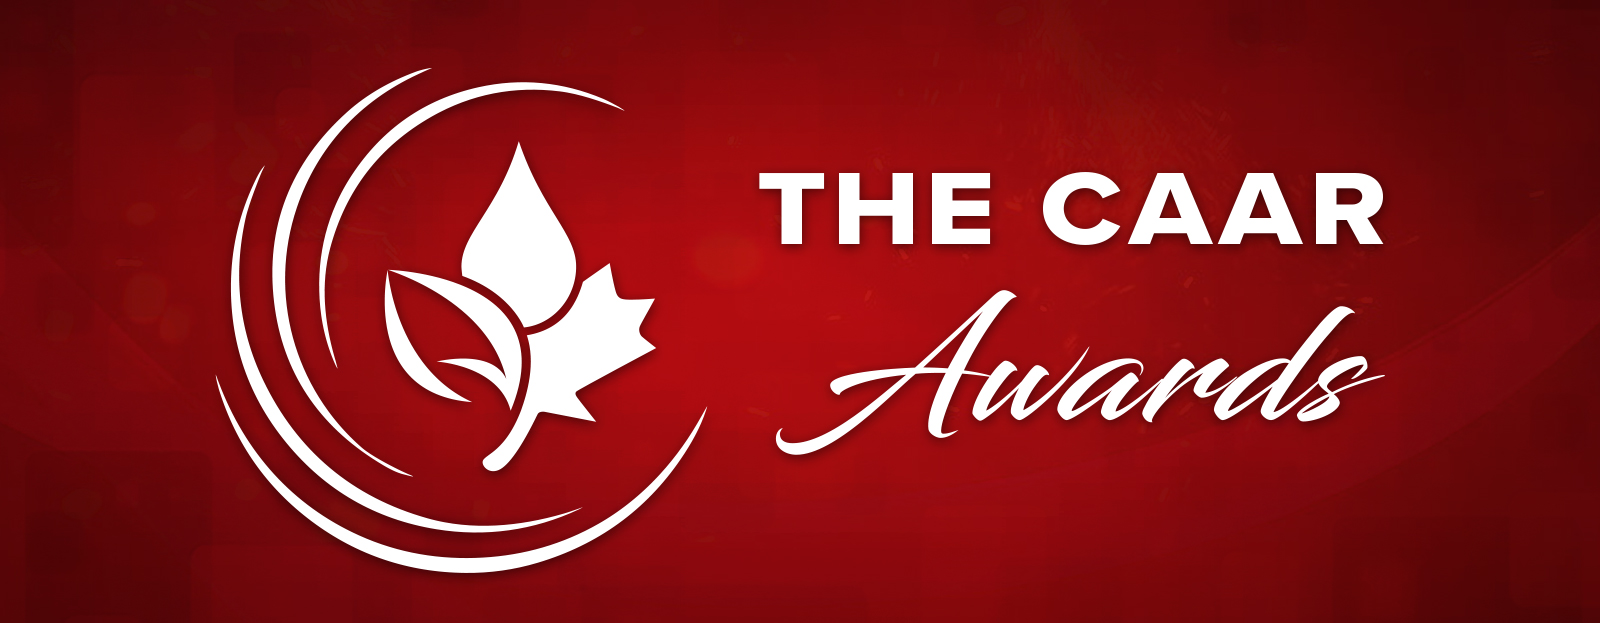 Banner of 2021 CAAR Awards Nominations